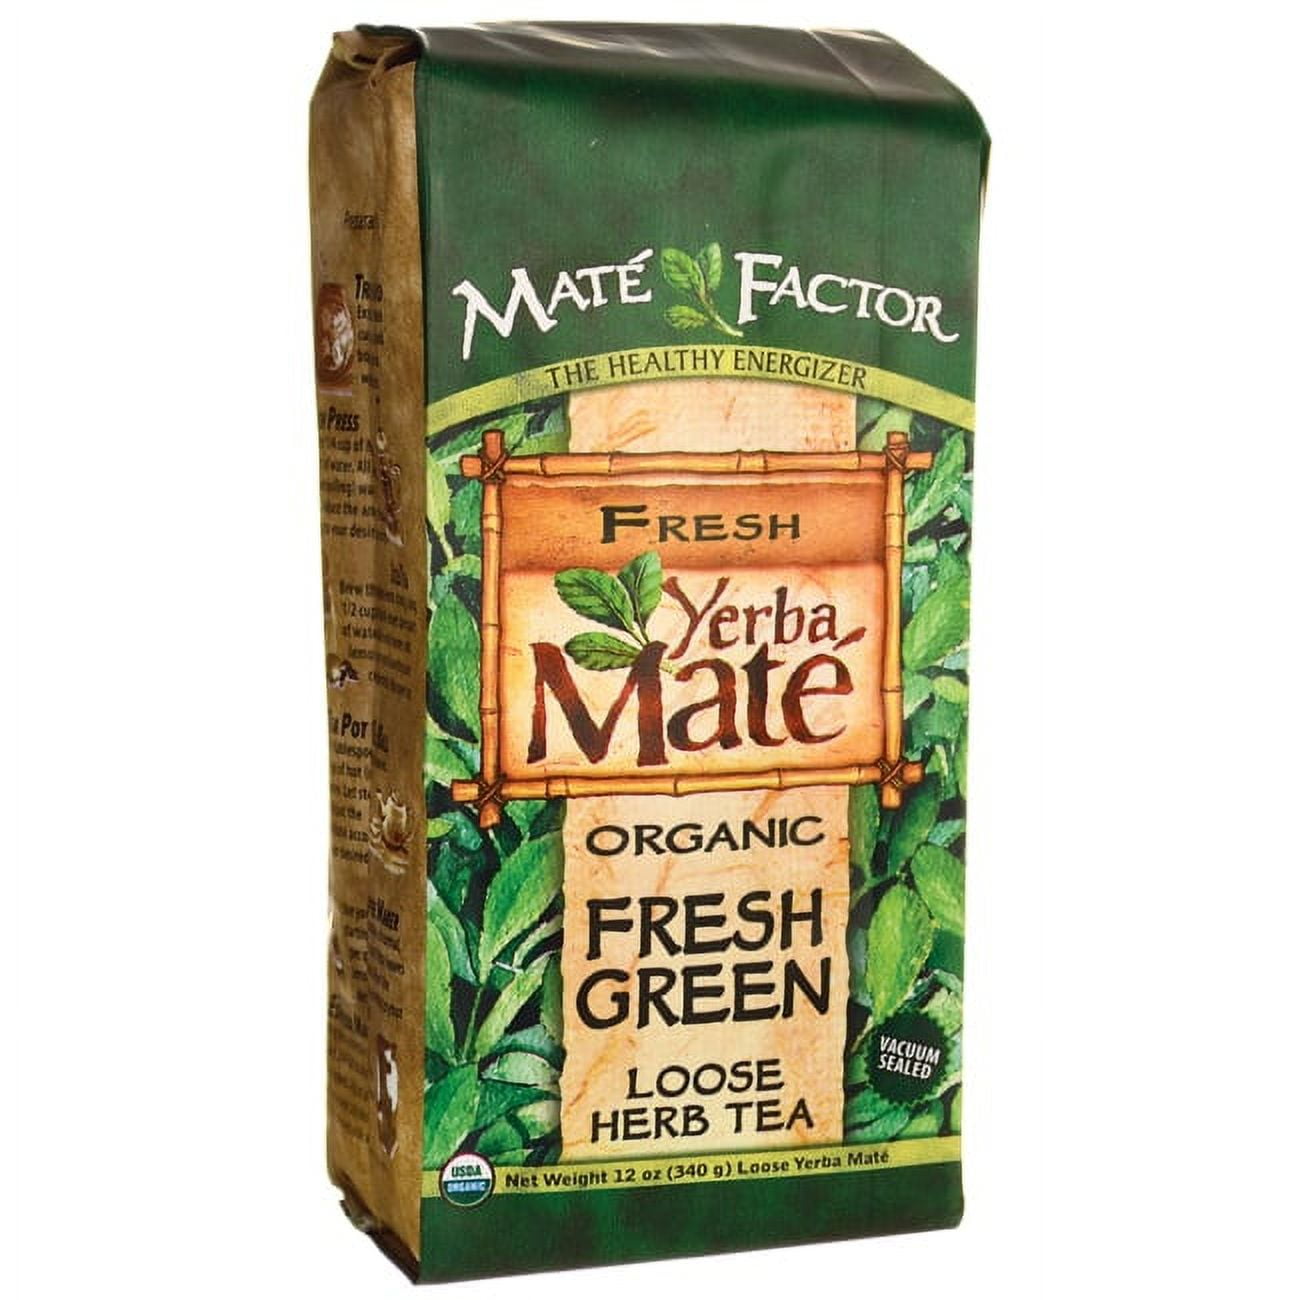 Mate Factor Organic Yerba Mate Loose Tea - Fresh Green 12 oz Pkg 